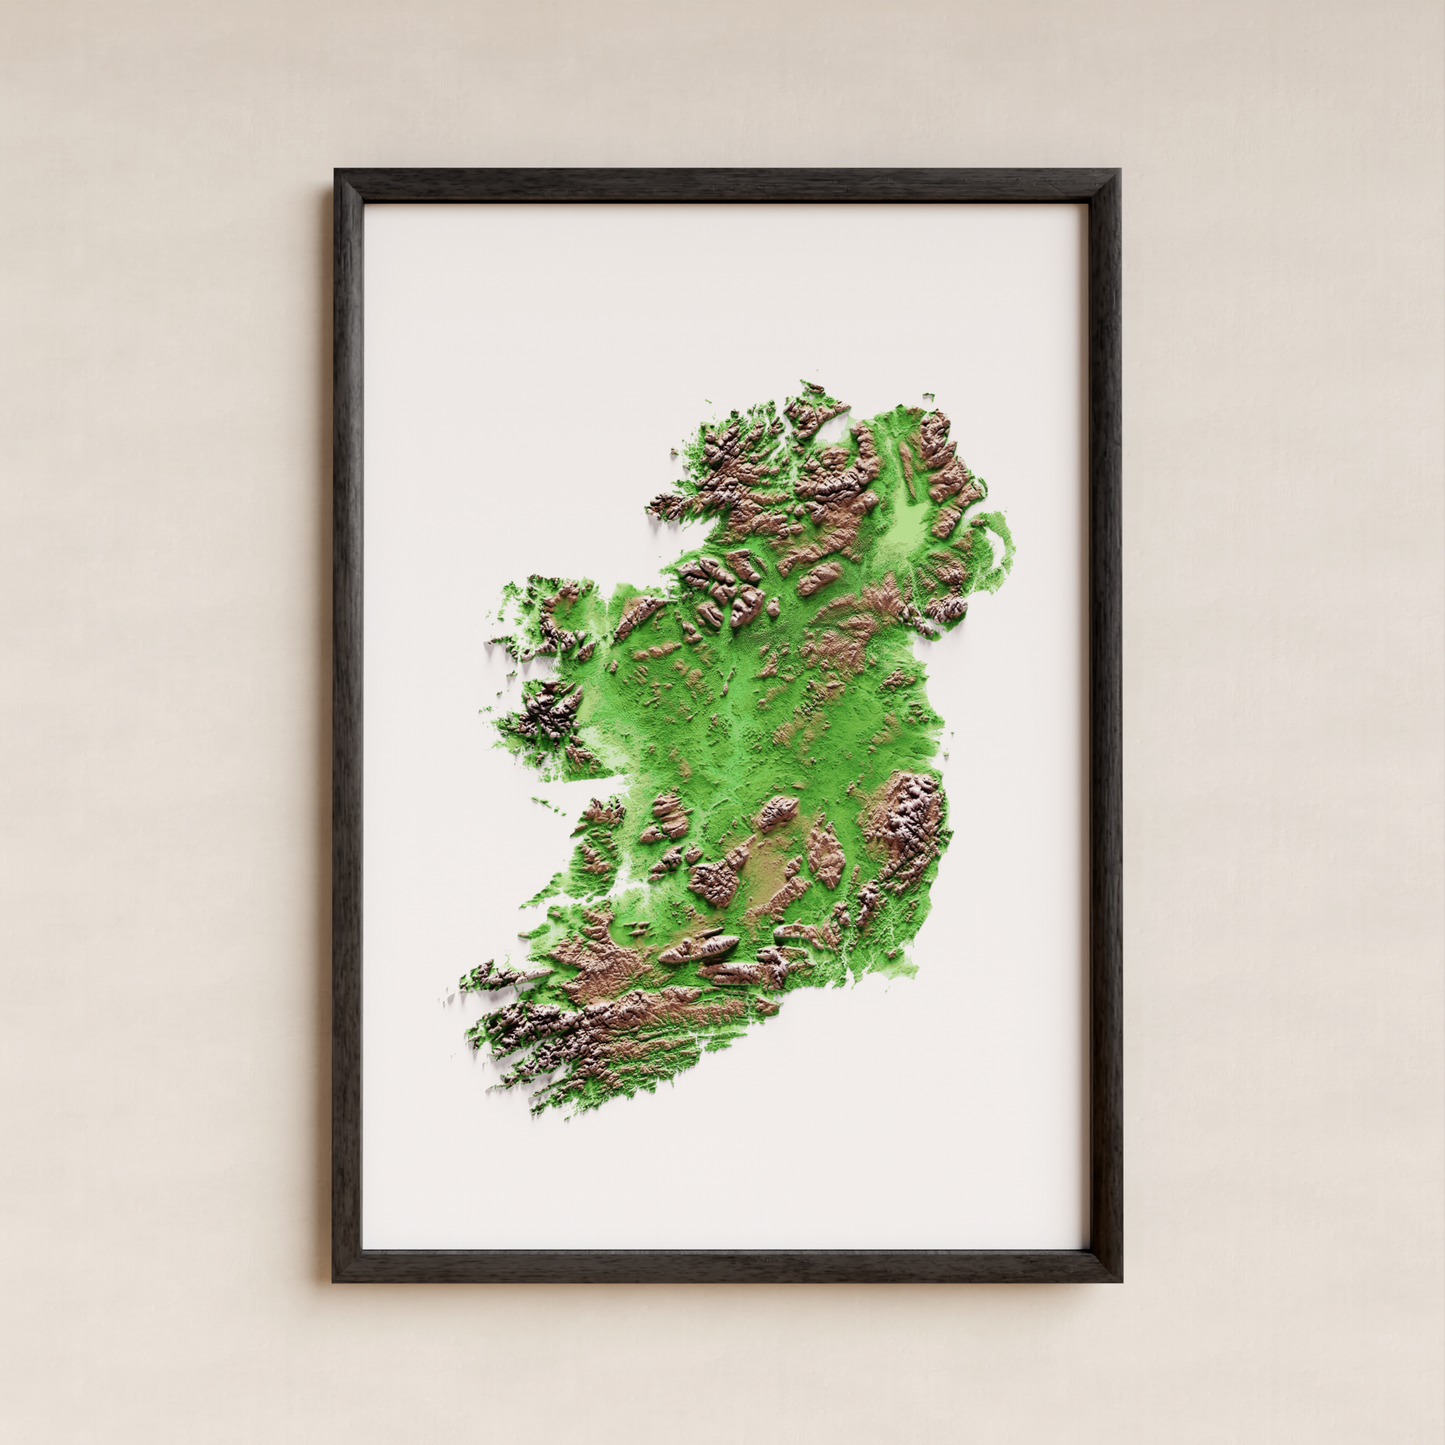 IRLANDA. Mapa de relieve clásico.